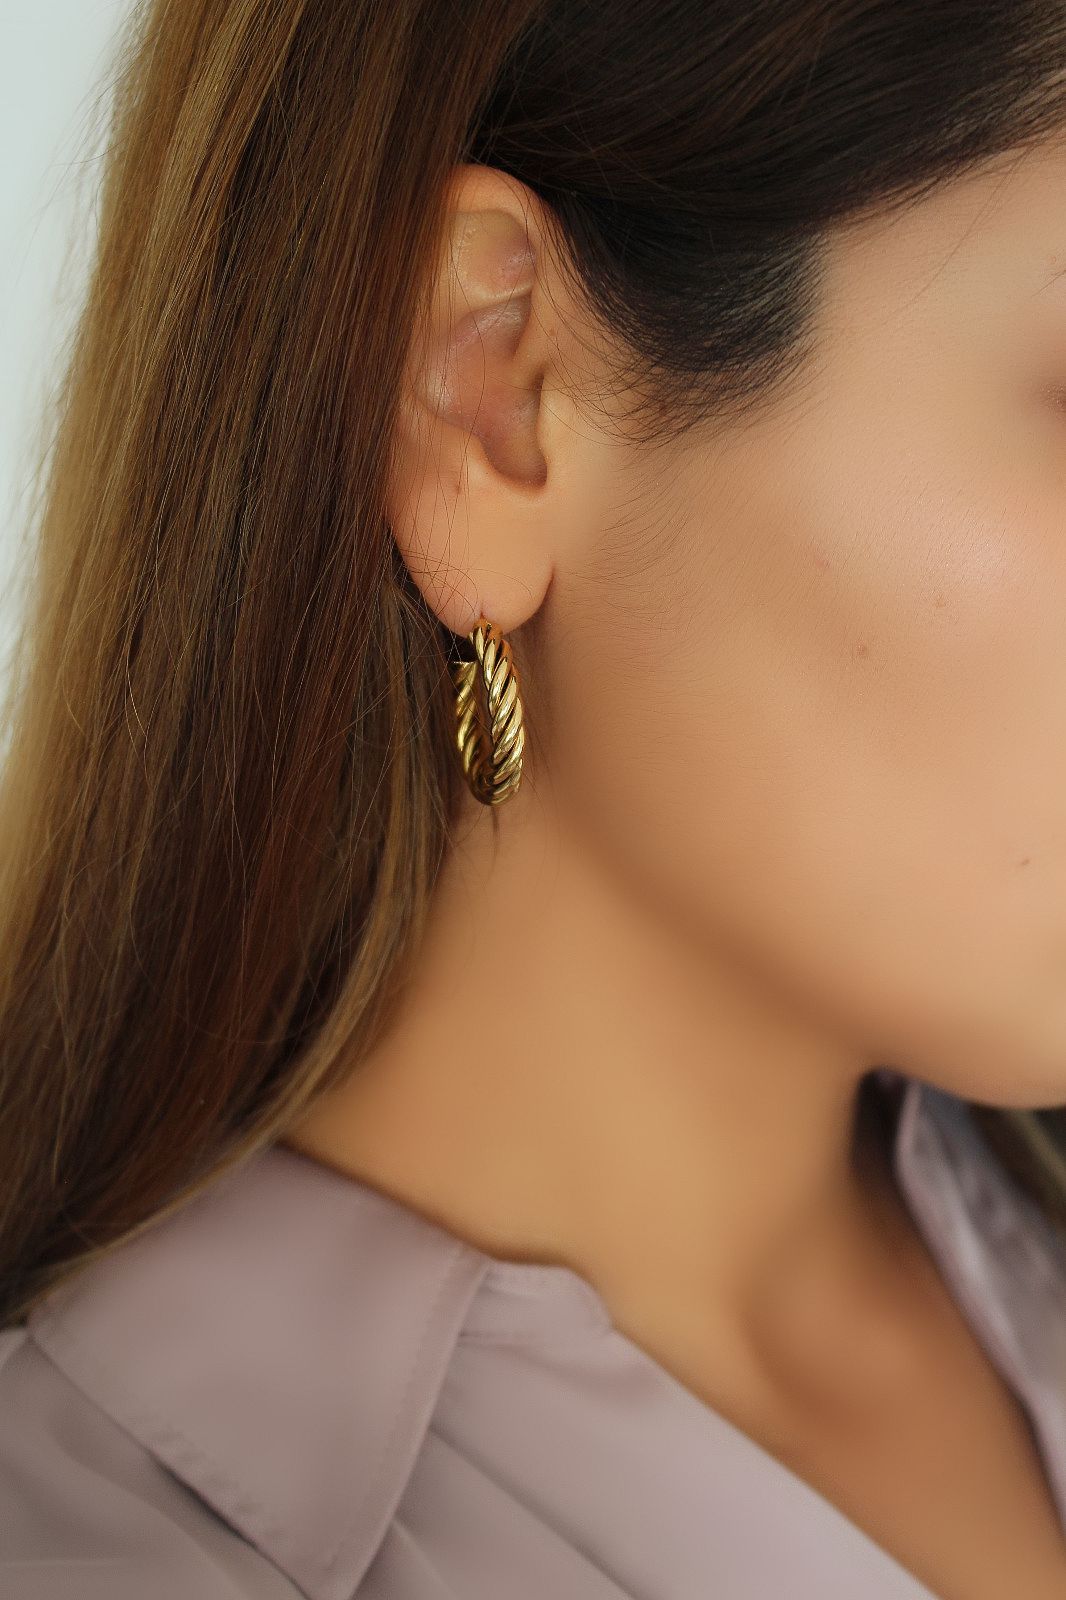 Amira Ohrringe Yasemen Store Schmuck Accessoires Edelstahl Stainless Steel 14K Vergoldet Gold jewel jewelry earring